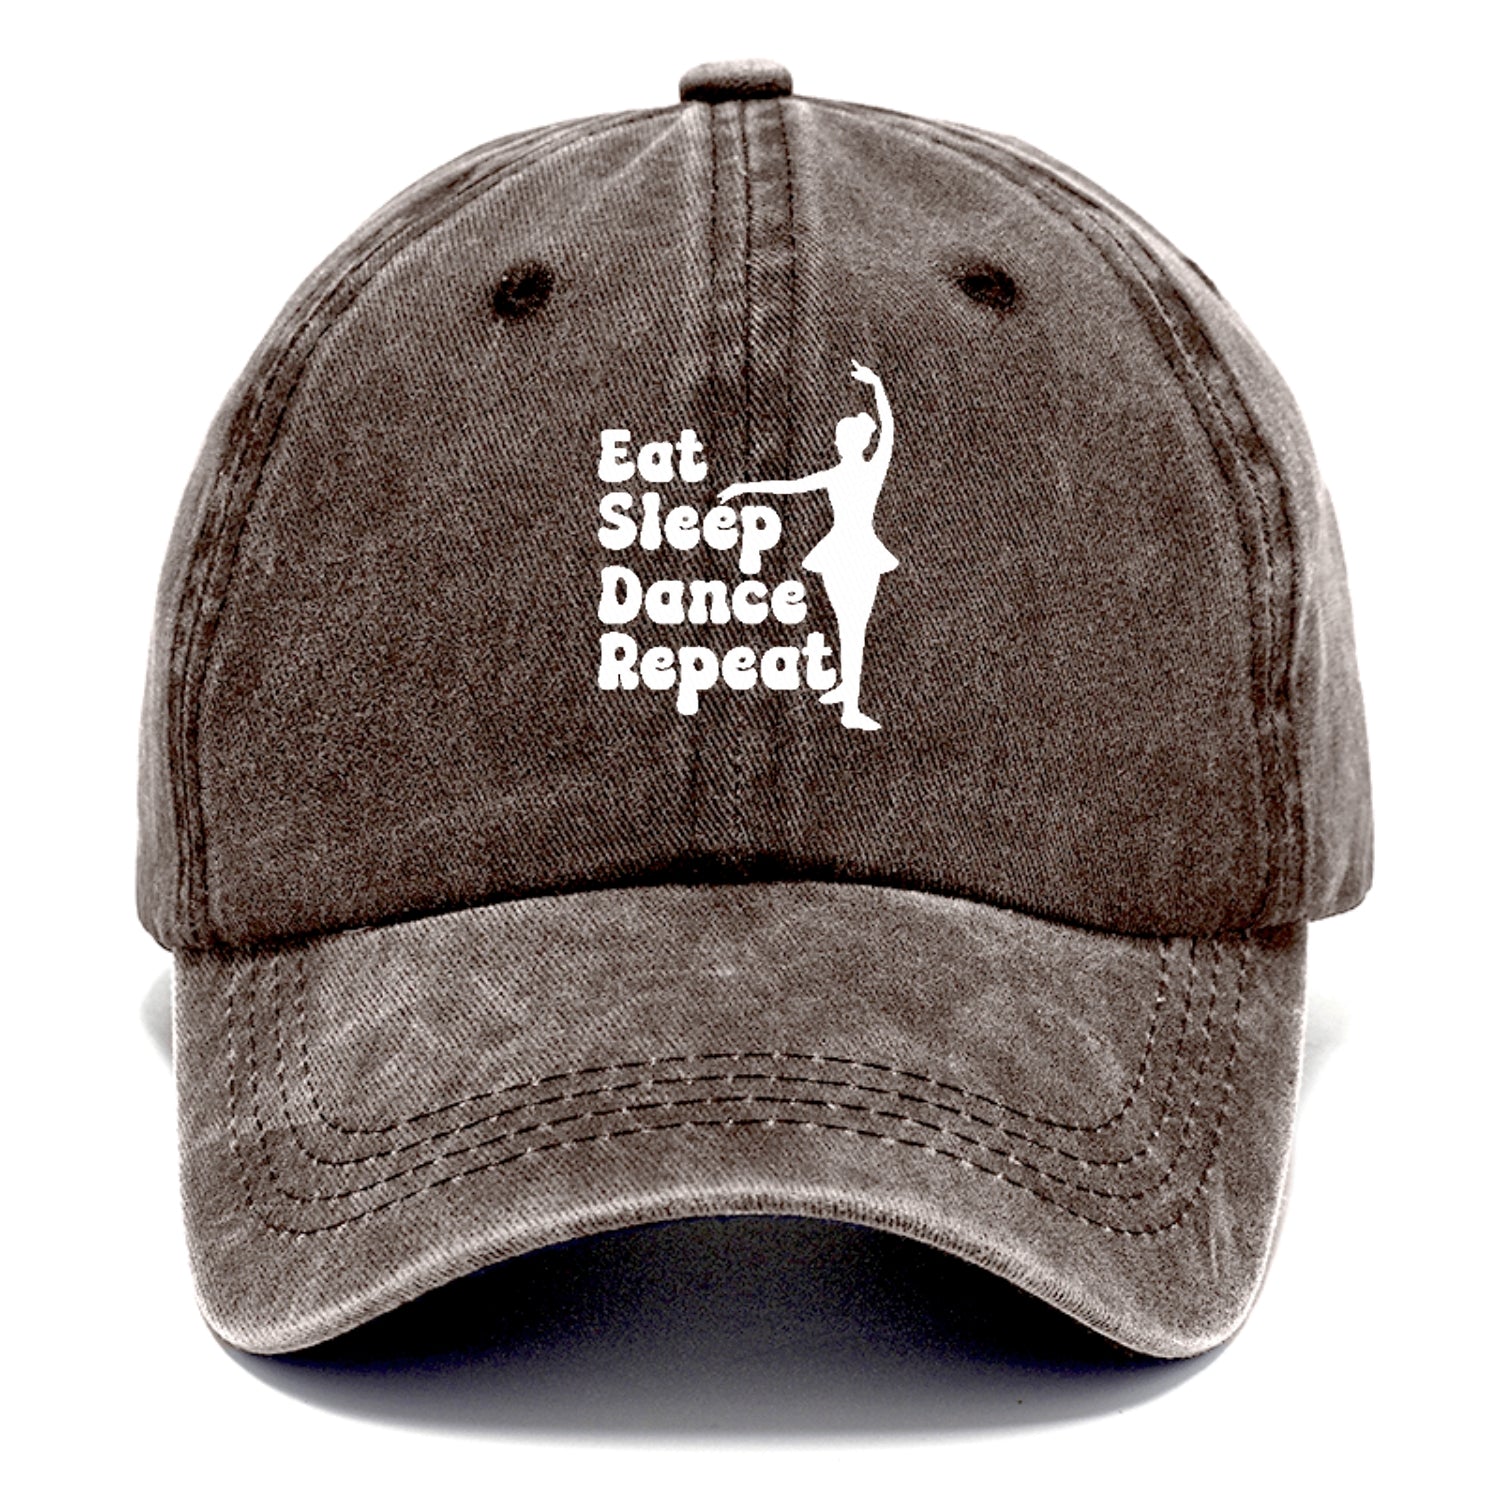 eat sleep dance repeat Hat